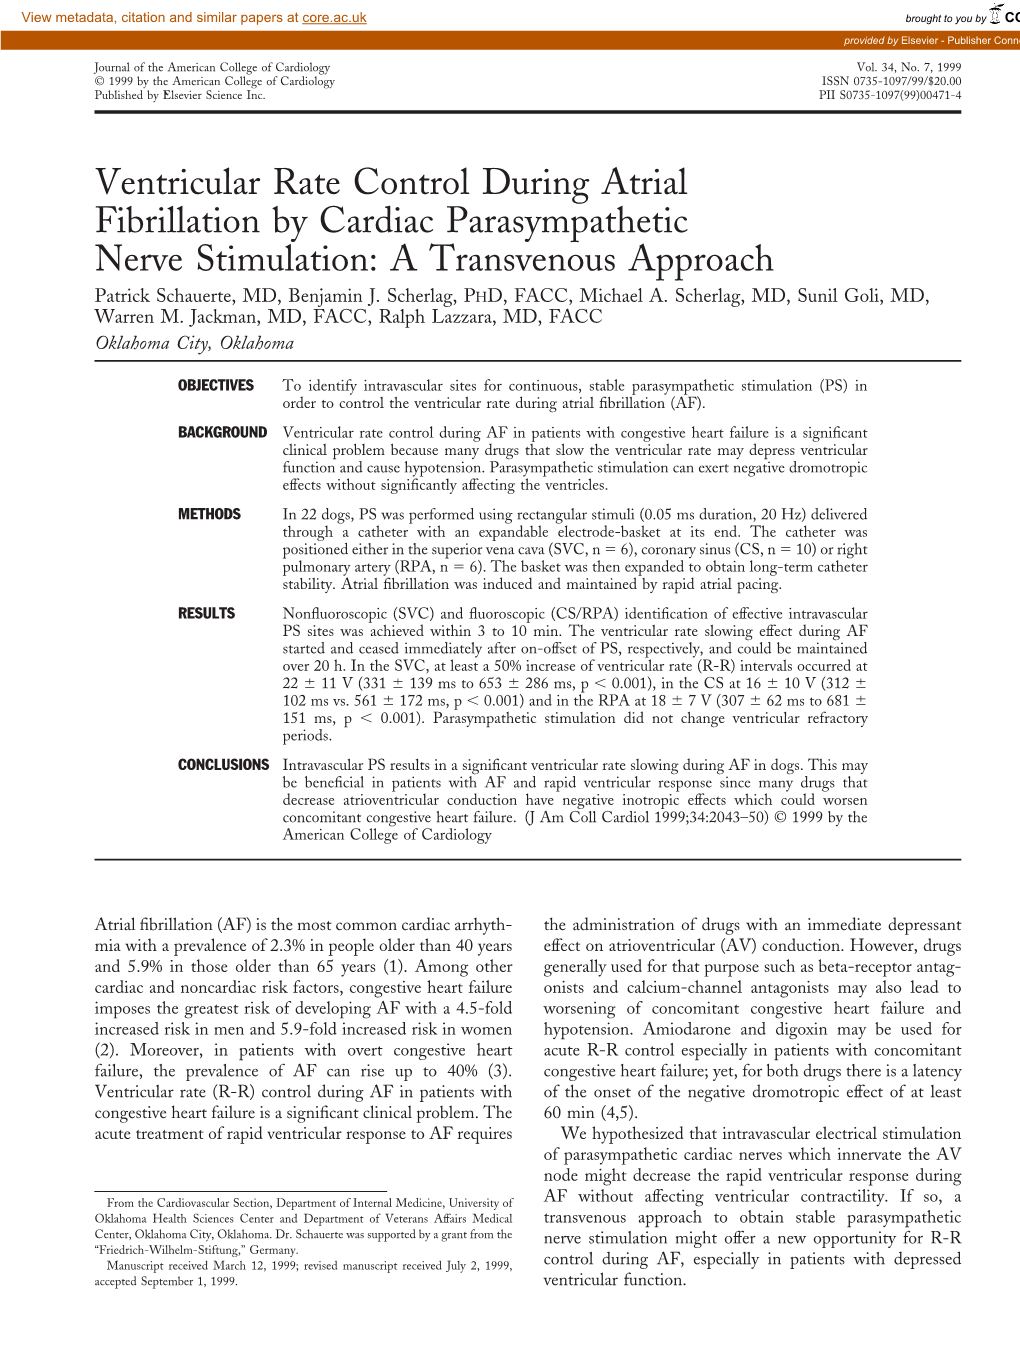 Ventricular Rate Control During Atrial Fibrillation by Cardiac Parasympathetic Nerve Stimulation: a Transvenous Approach Patrick Schauerte, MD, Benjamin J